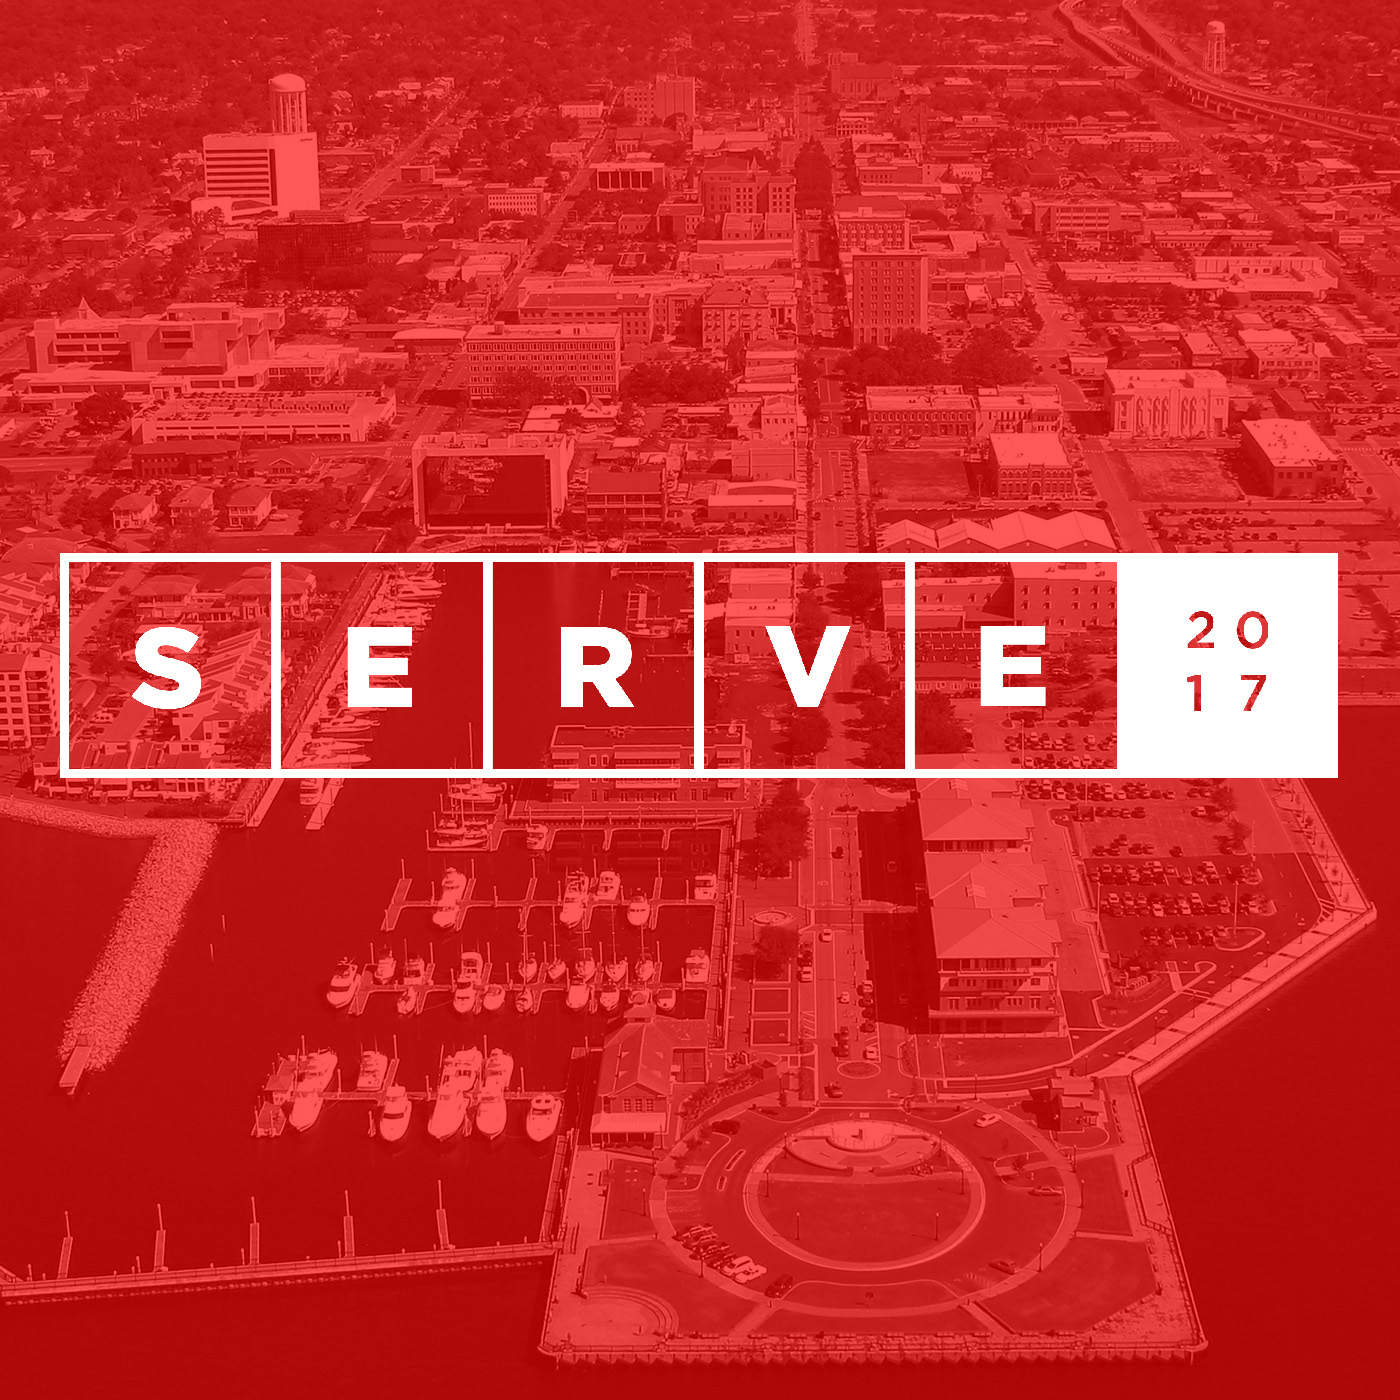 Serve - Part 2 - Chosen To Serve